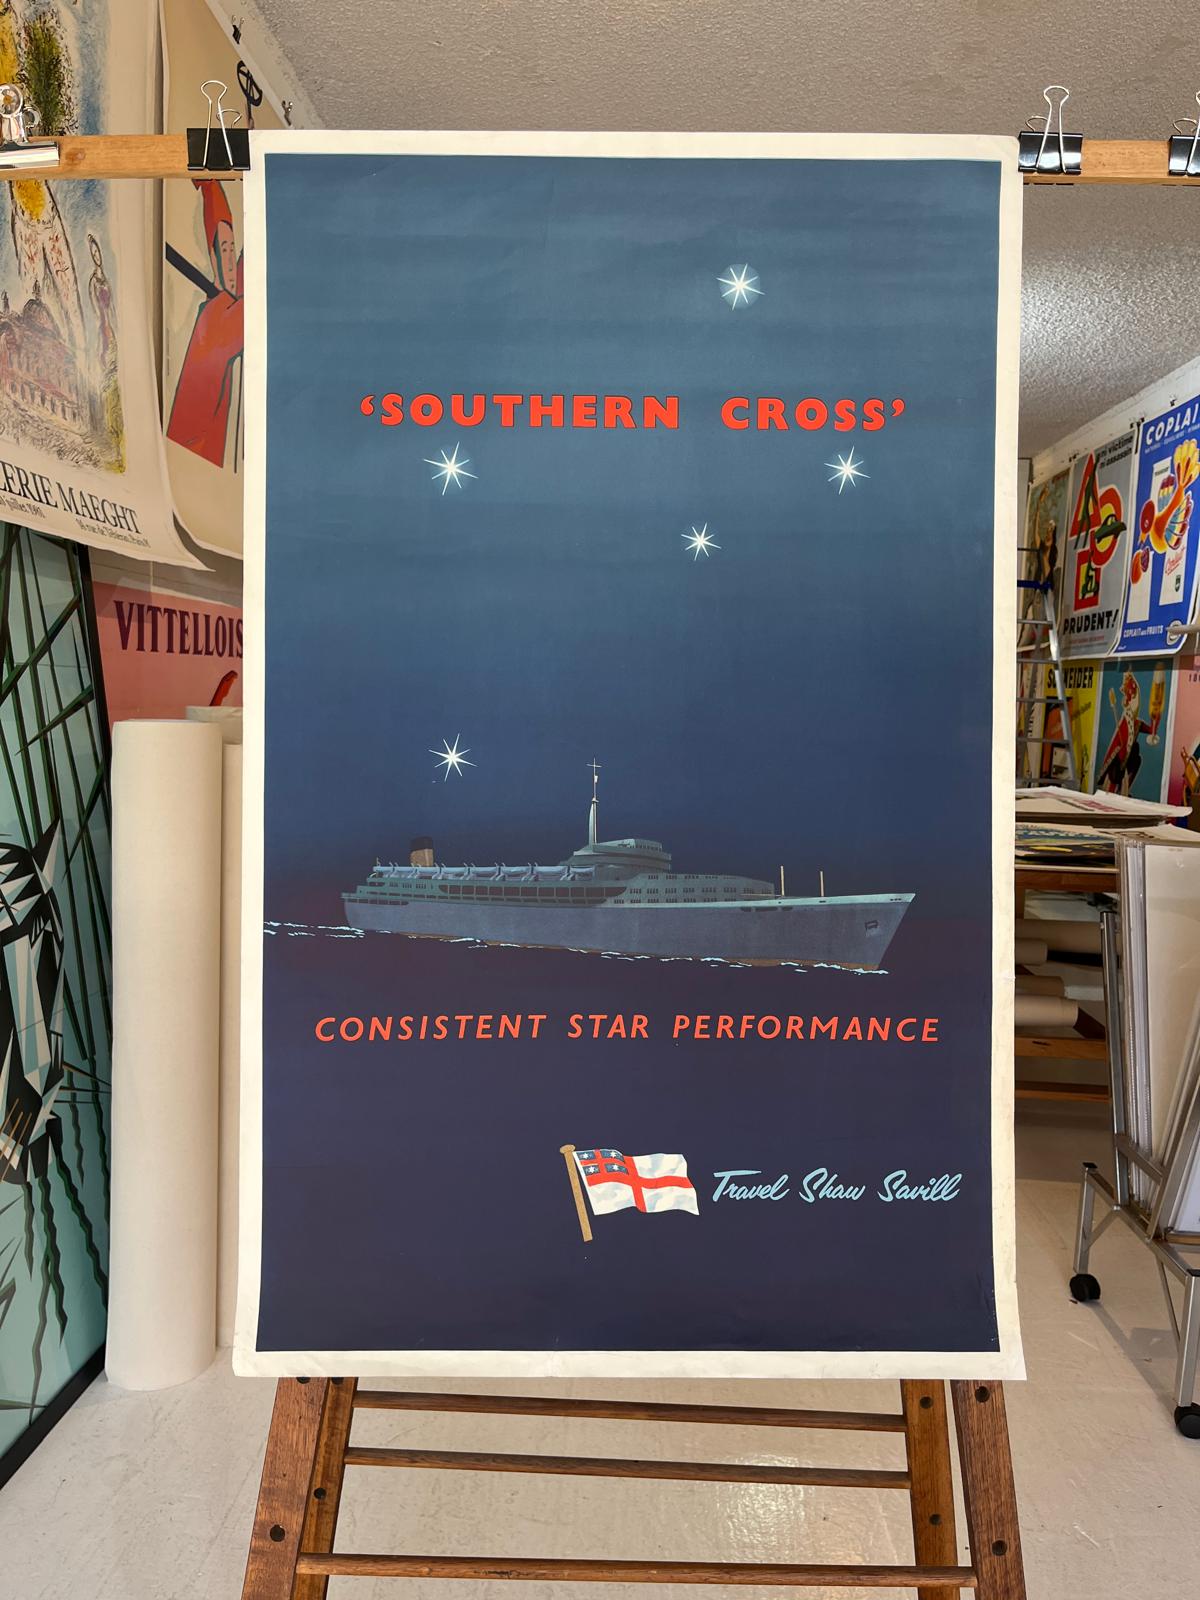 Southern Cross Cruise Liner – Travel Shaw Savill